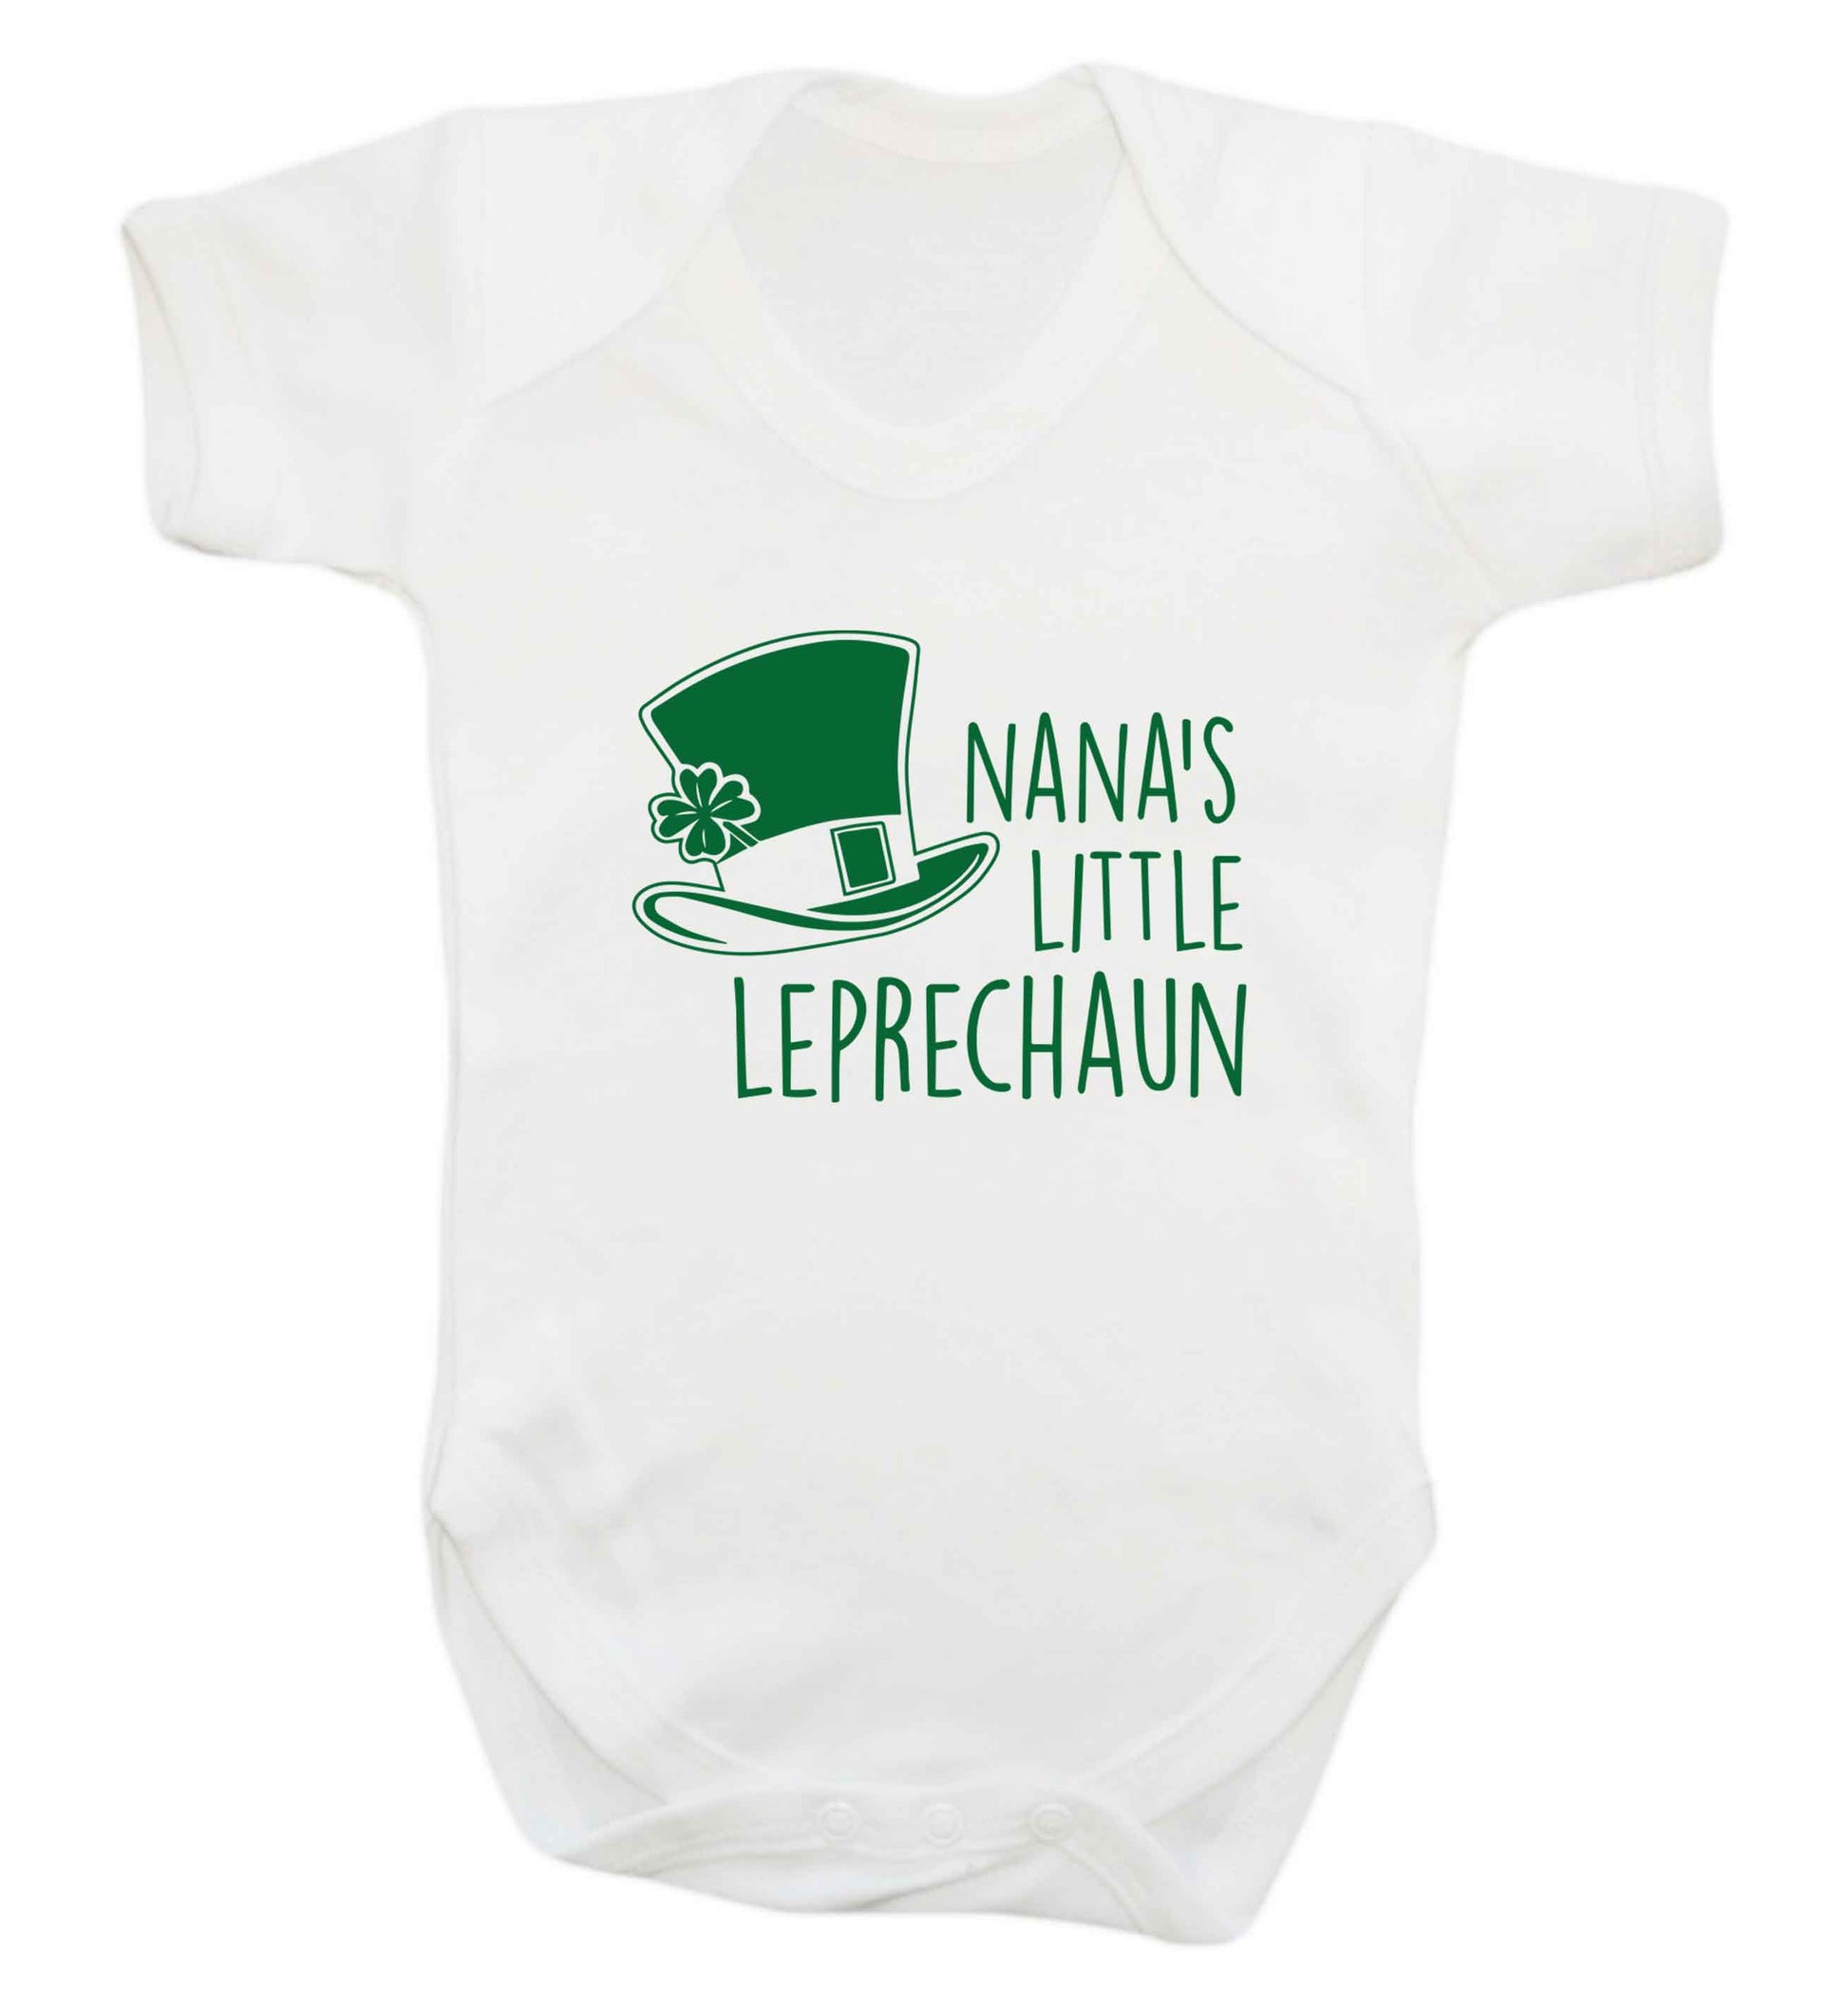 Nana's little leprechaun baby vest white 18-24 months